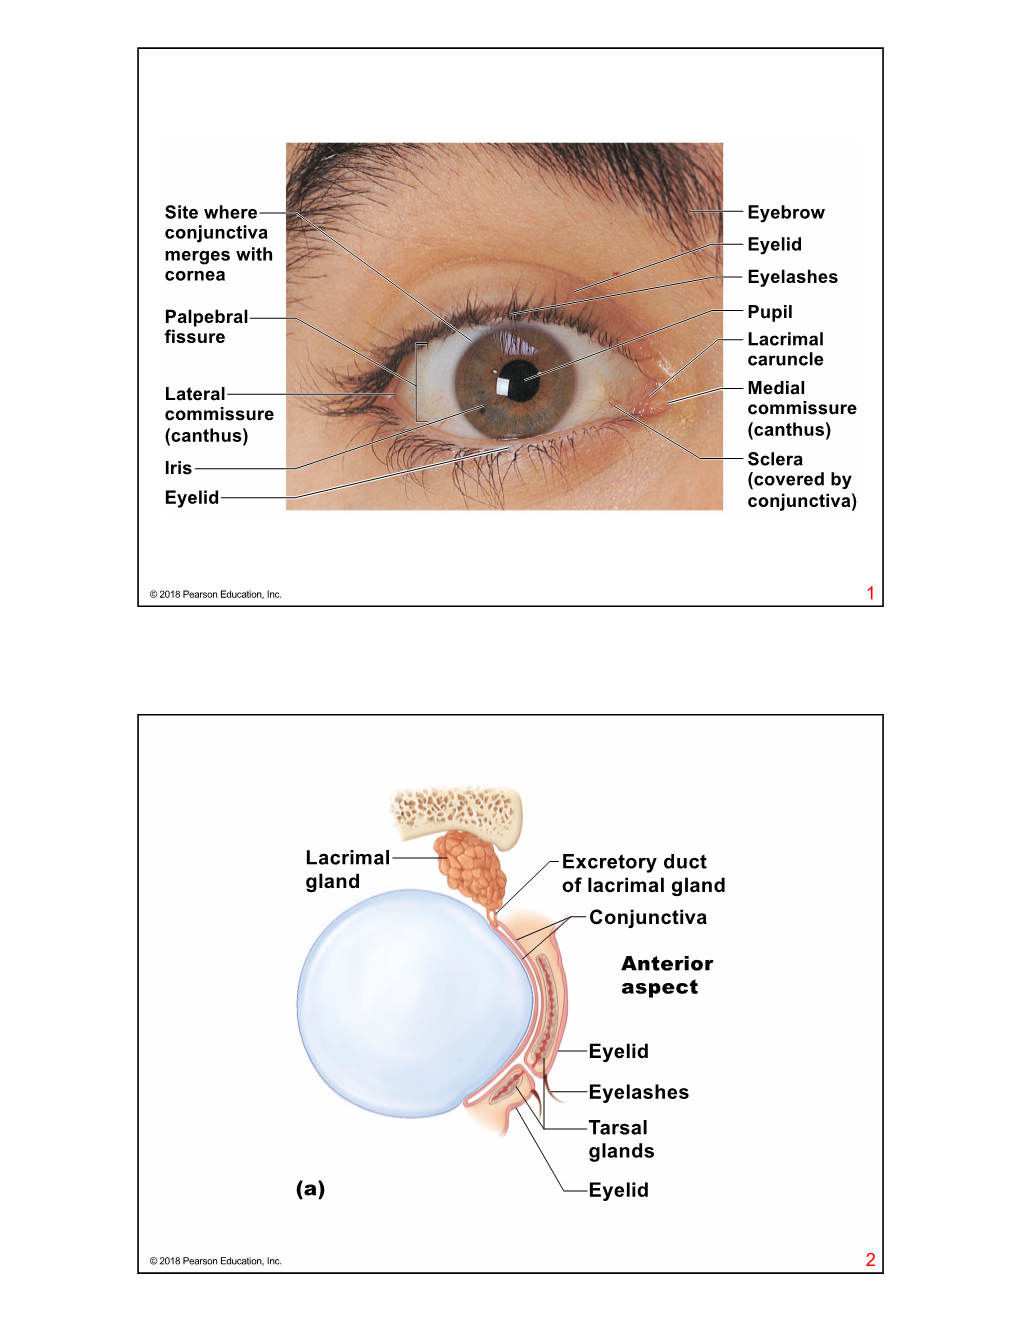 Lacrimal Gland Excretory Duct of Lacrimal Gland Conjunctiva Anterior